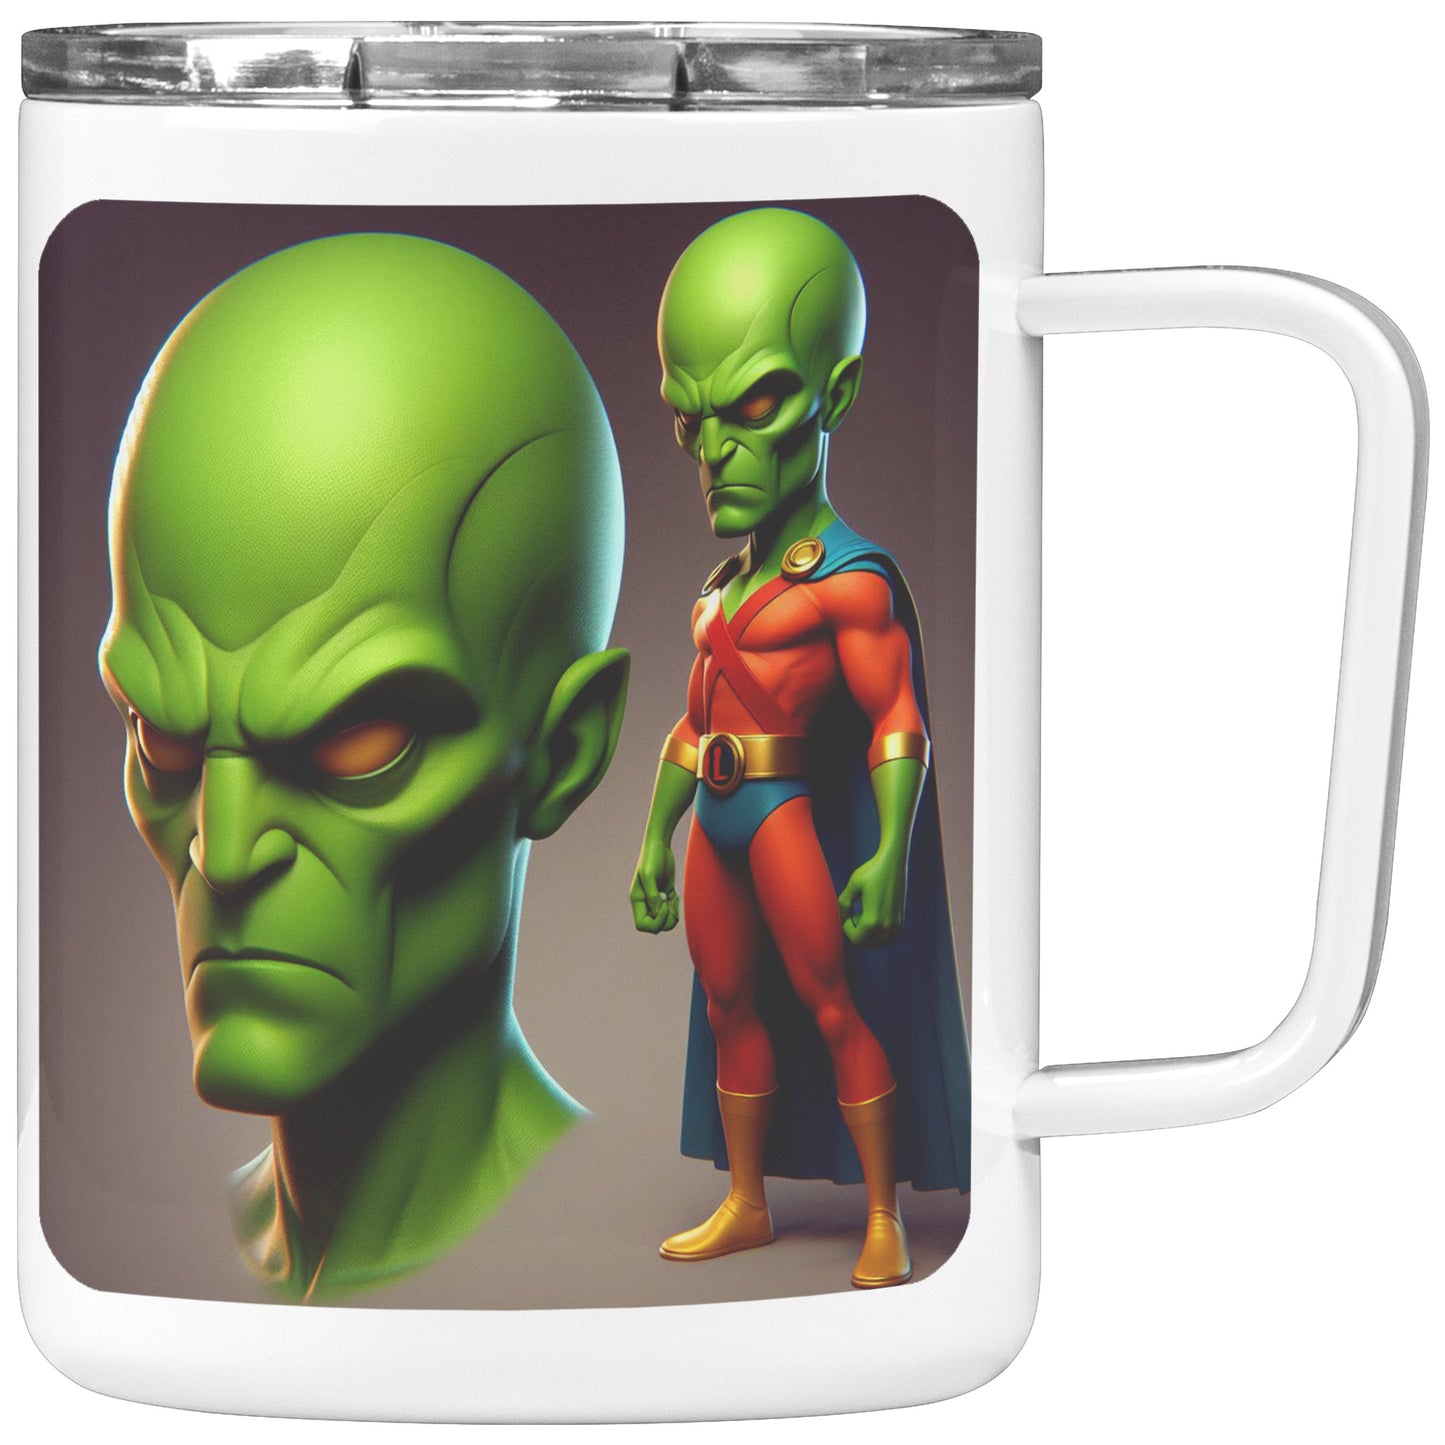 Martian Alien Caricature - Coffee Mug #10